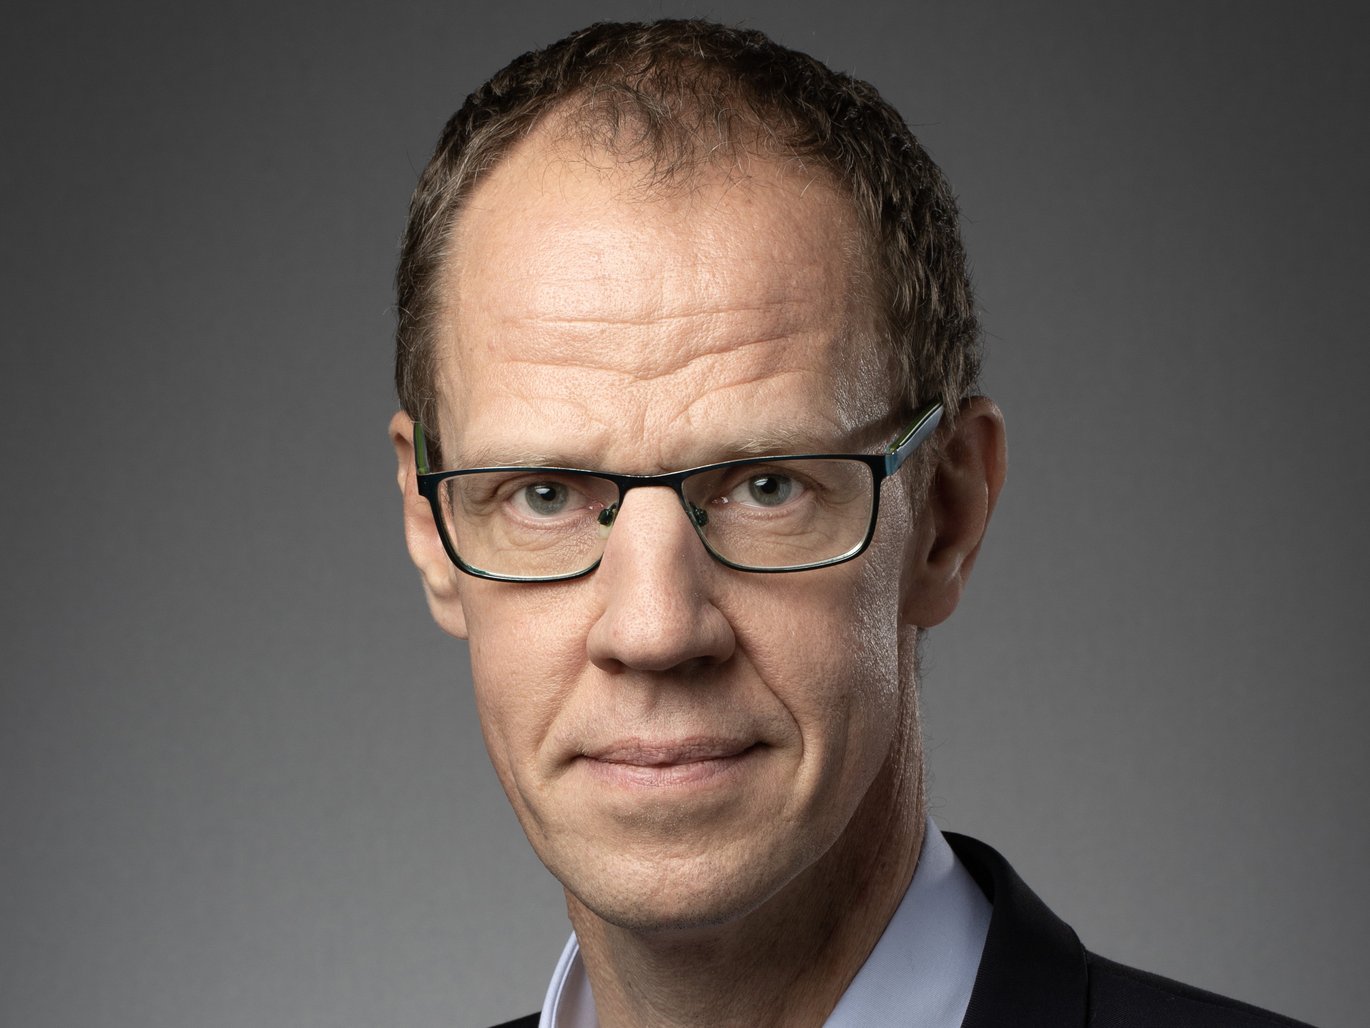 Professor Peter Bjerre Mortensen. Foto: Lars Kruse/AU Foto